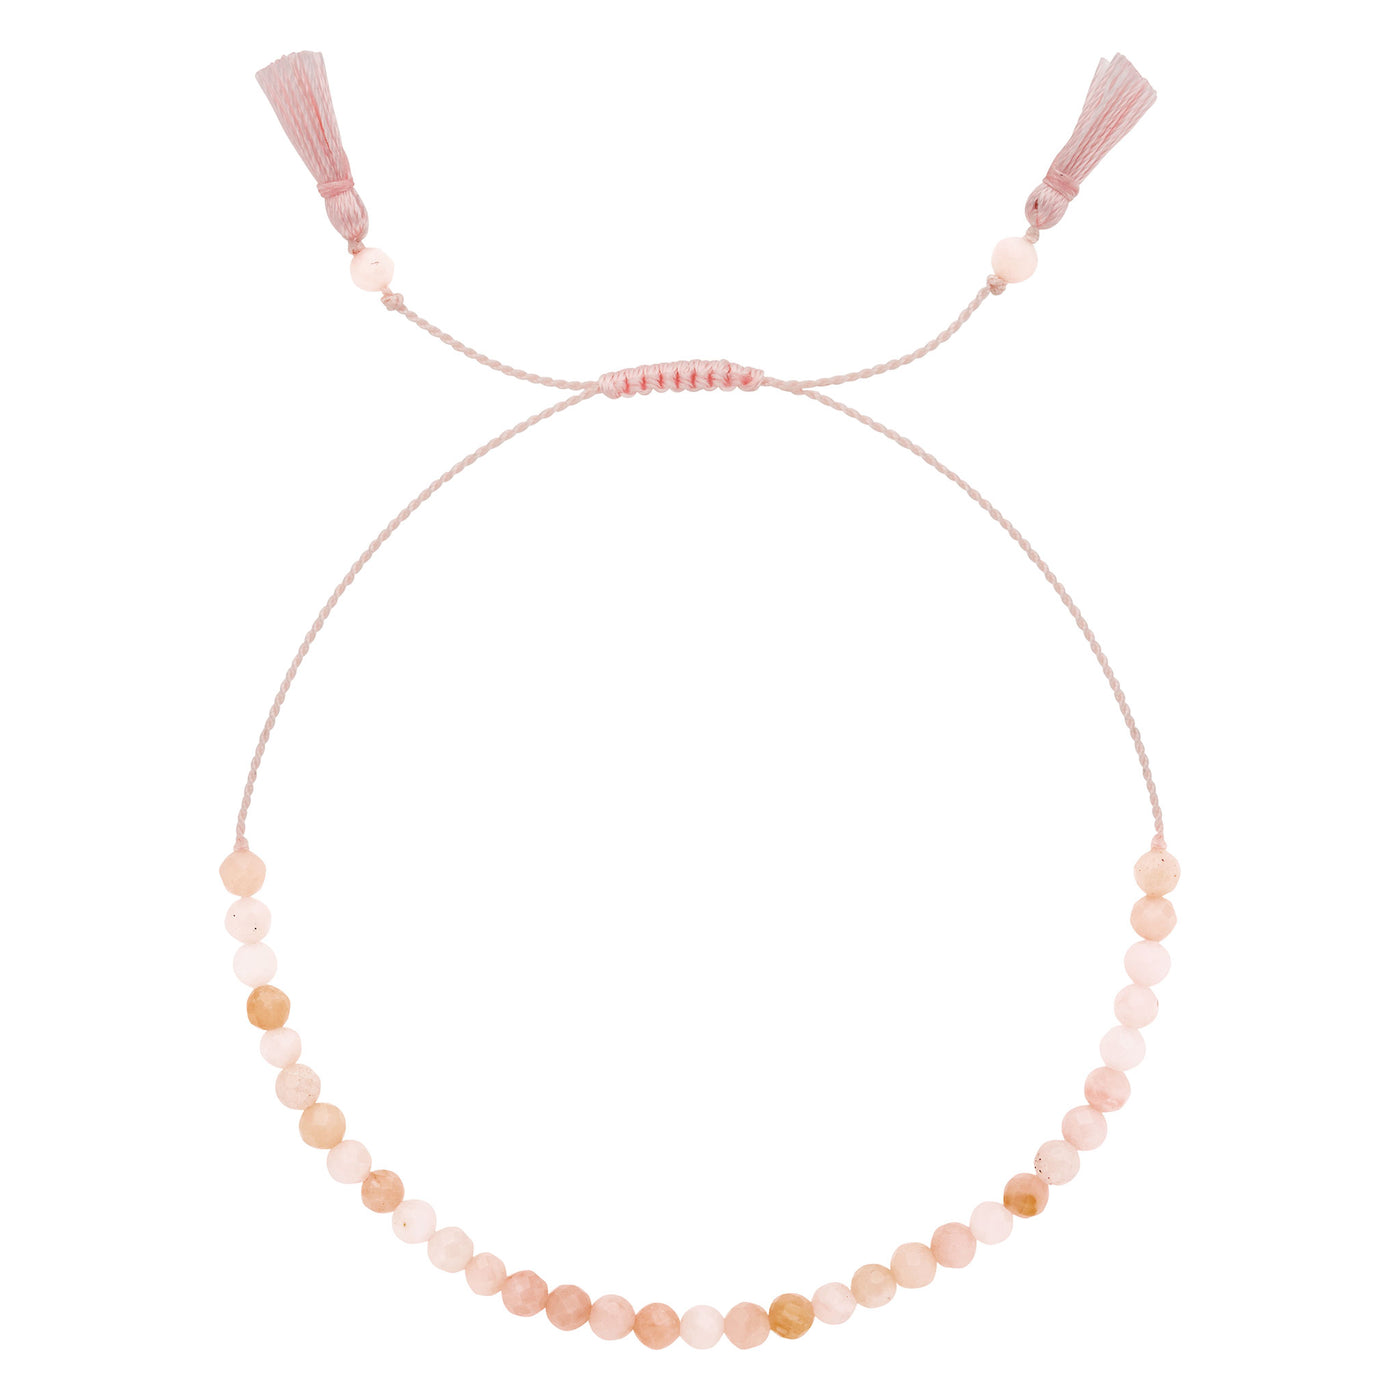 OCTOBER Birthstone: Pink Opal Women's Delicate Faceted Mini Tassel Bracelet